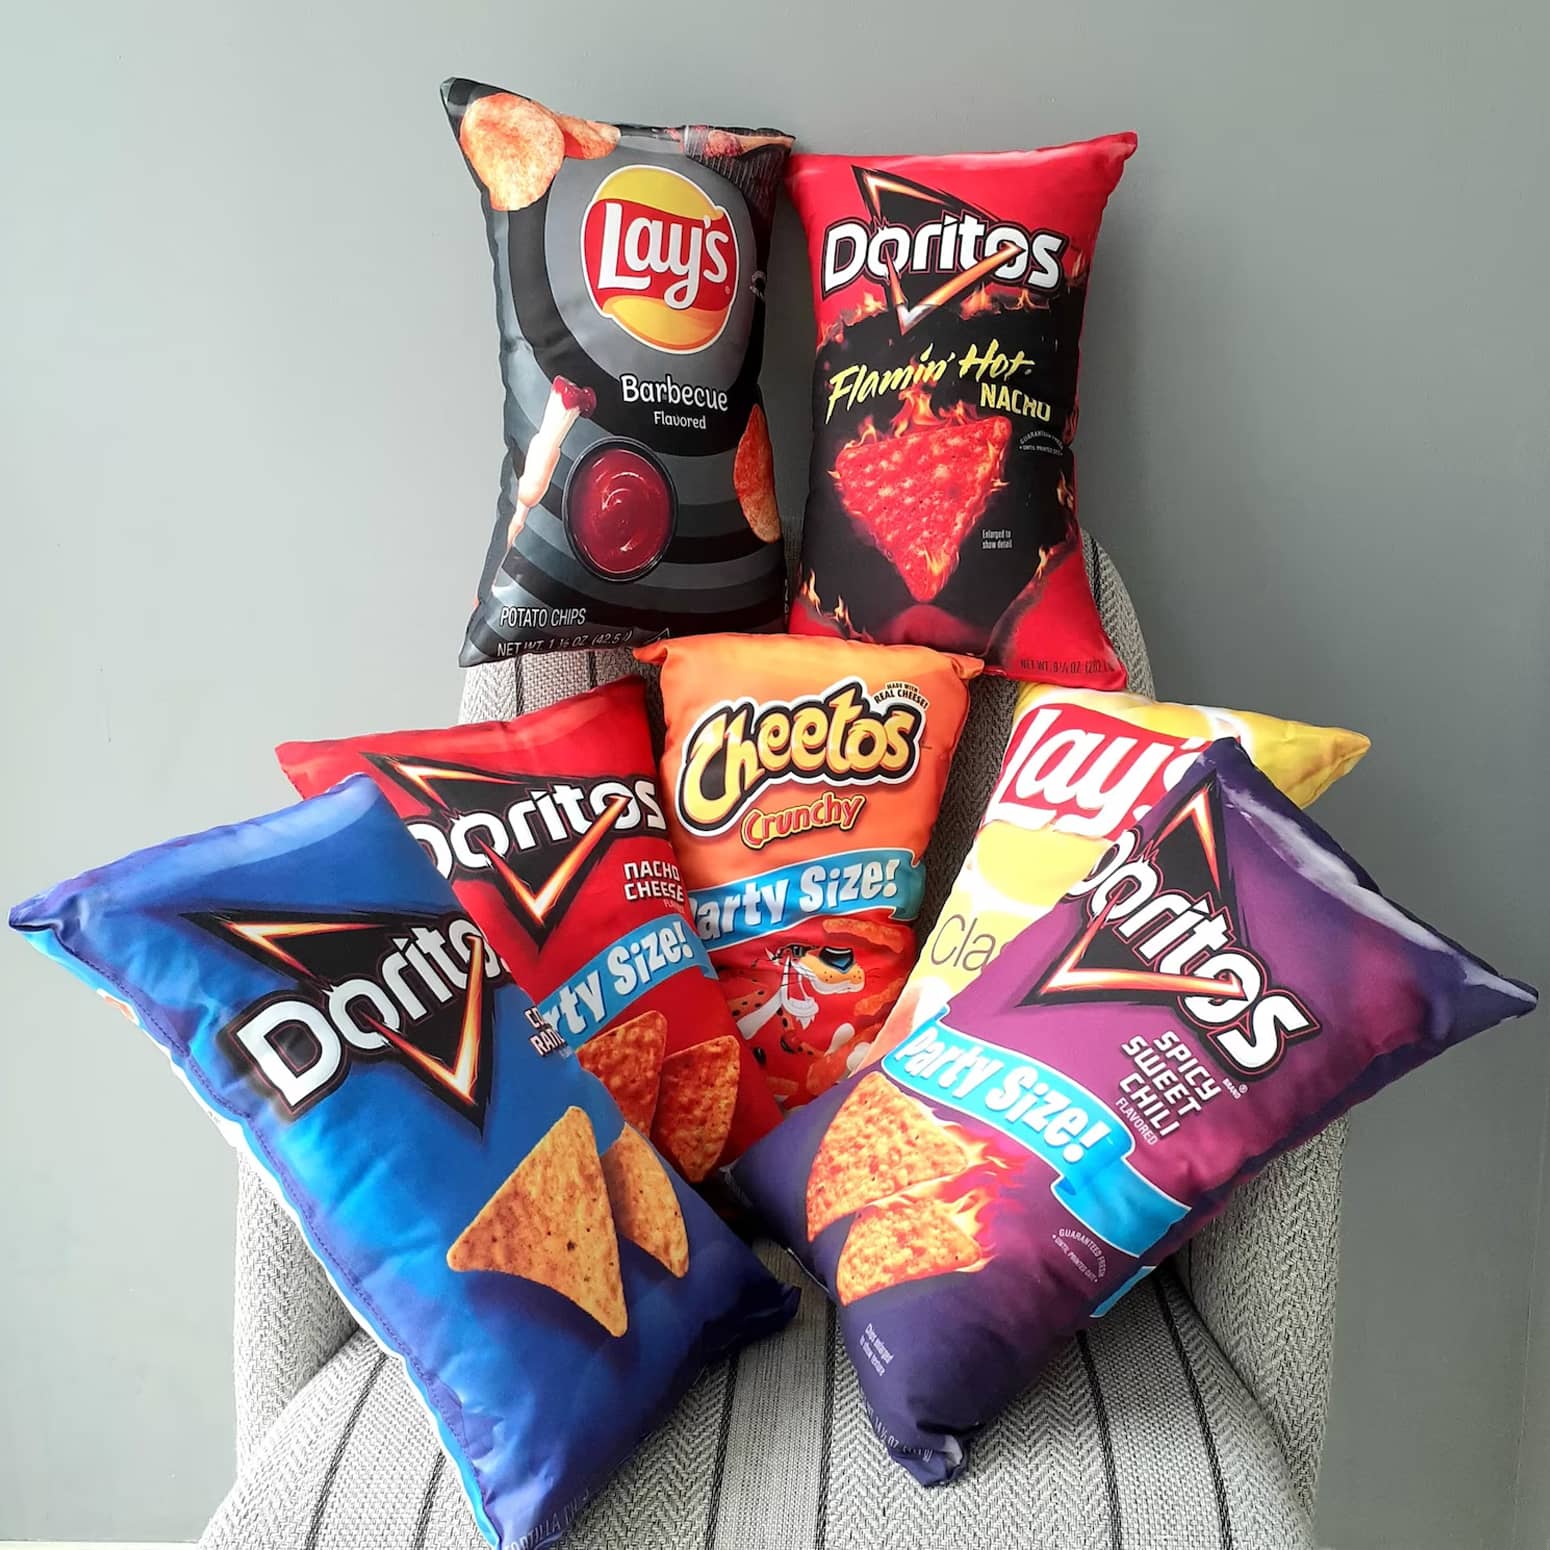 Bag of Chips Throw Pillows - Doritos, Lay's, and Cheetos